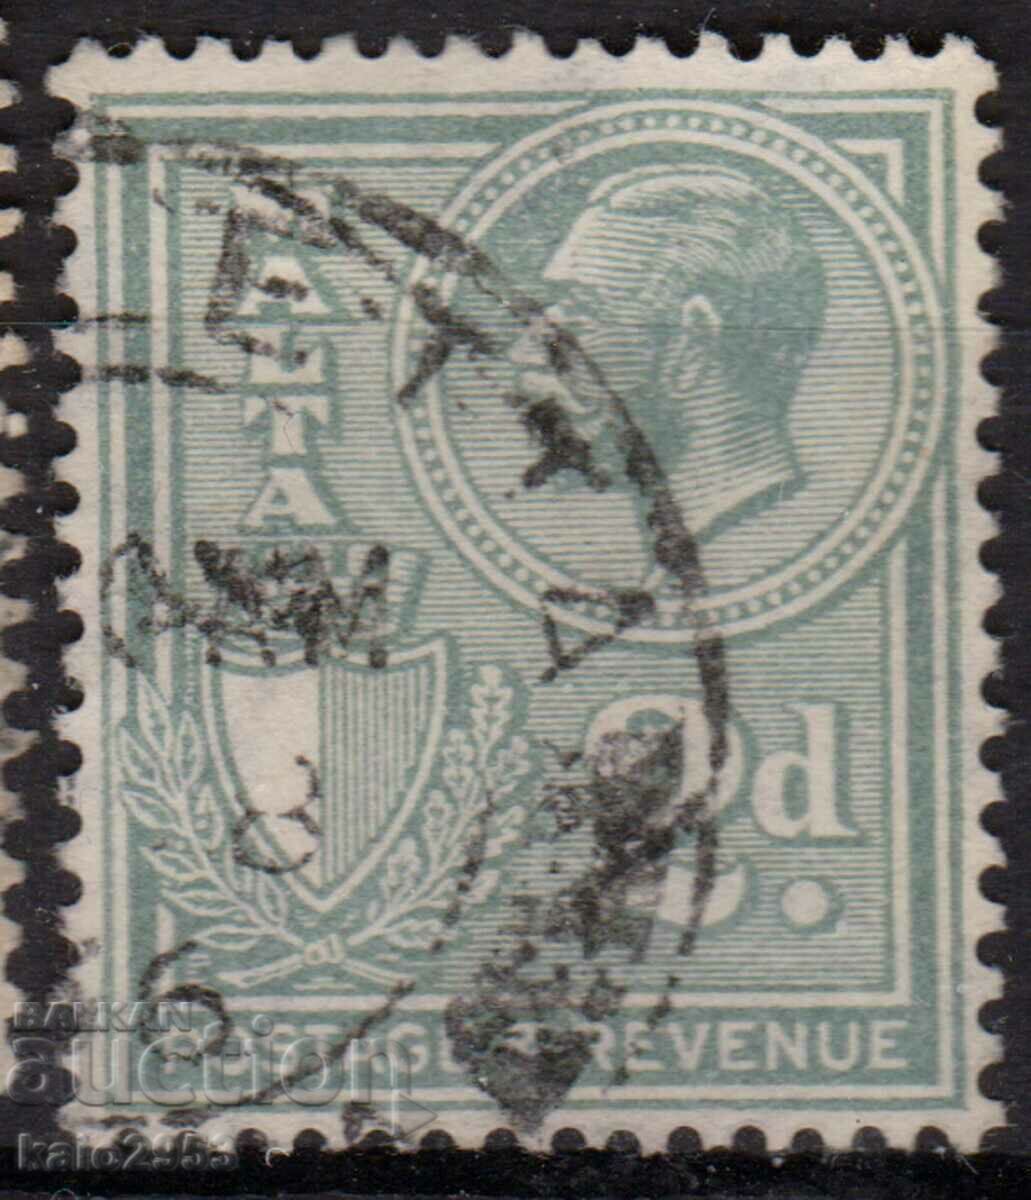 GB/Malta-1930-Regular-KE V+stamp-"Postage/Revenue", γραμματόσημο